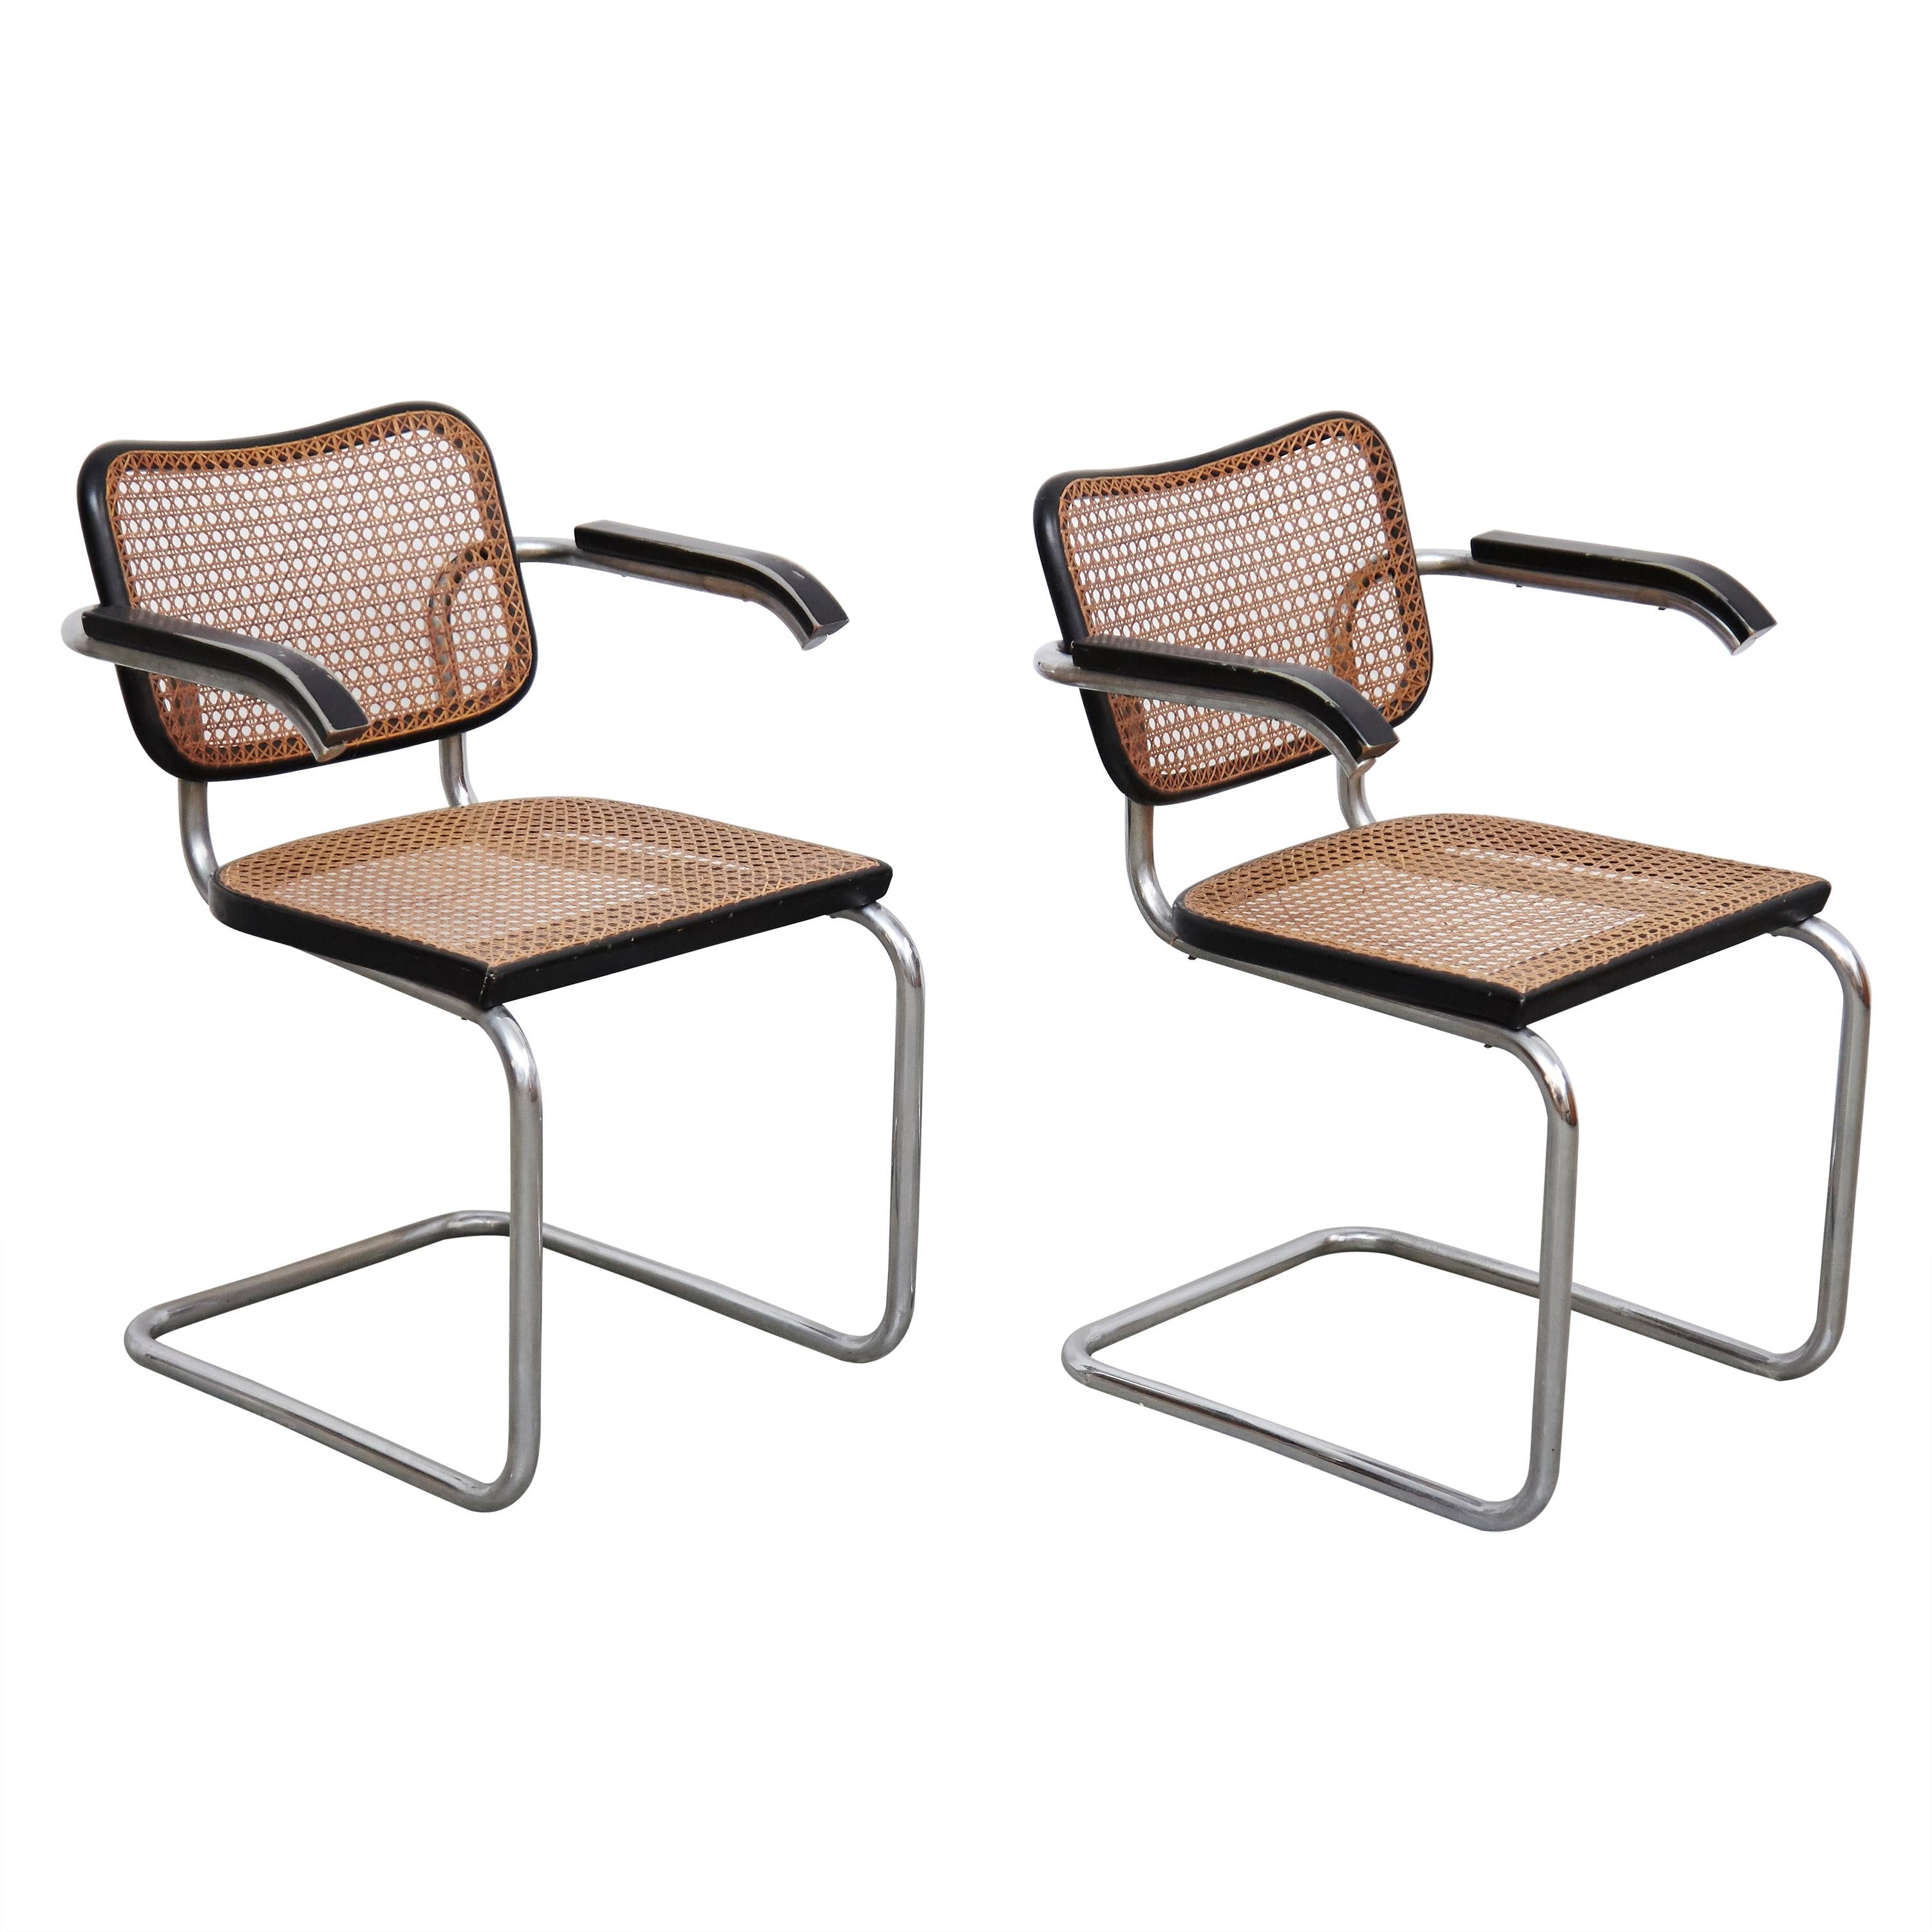 Pair of Marcel Breuer B64 Design Cesca Chairs by Gavina, circa 1960